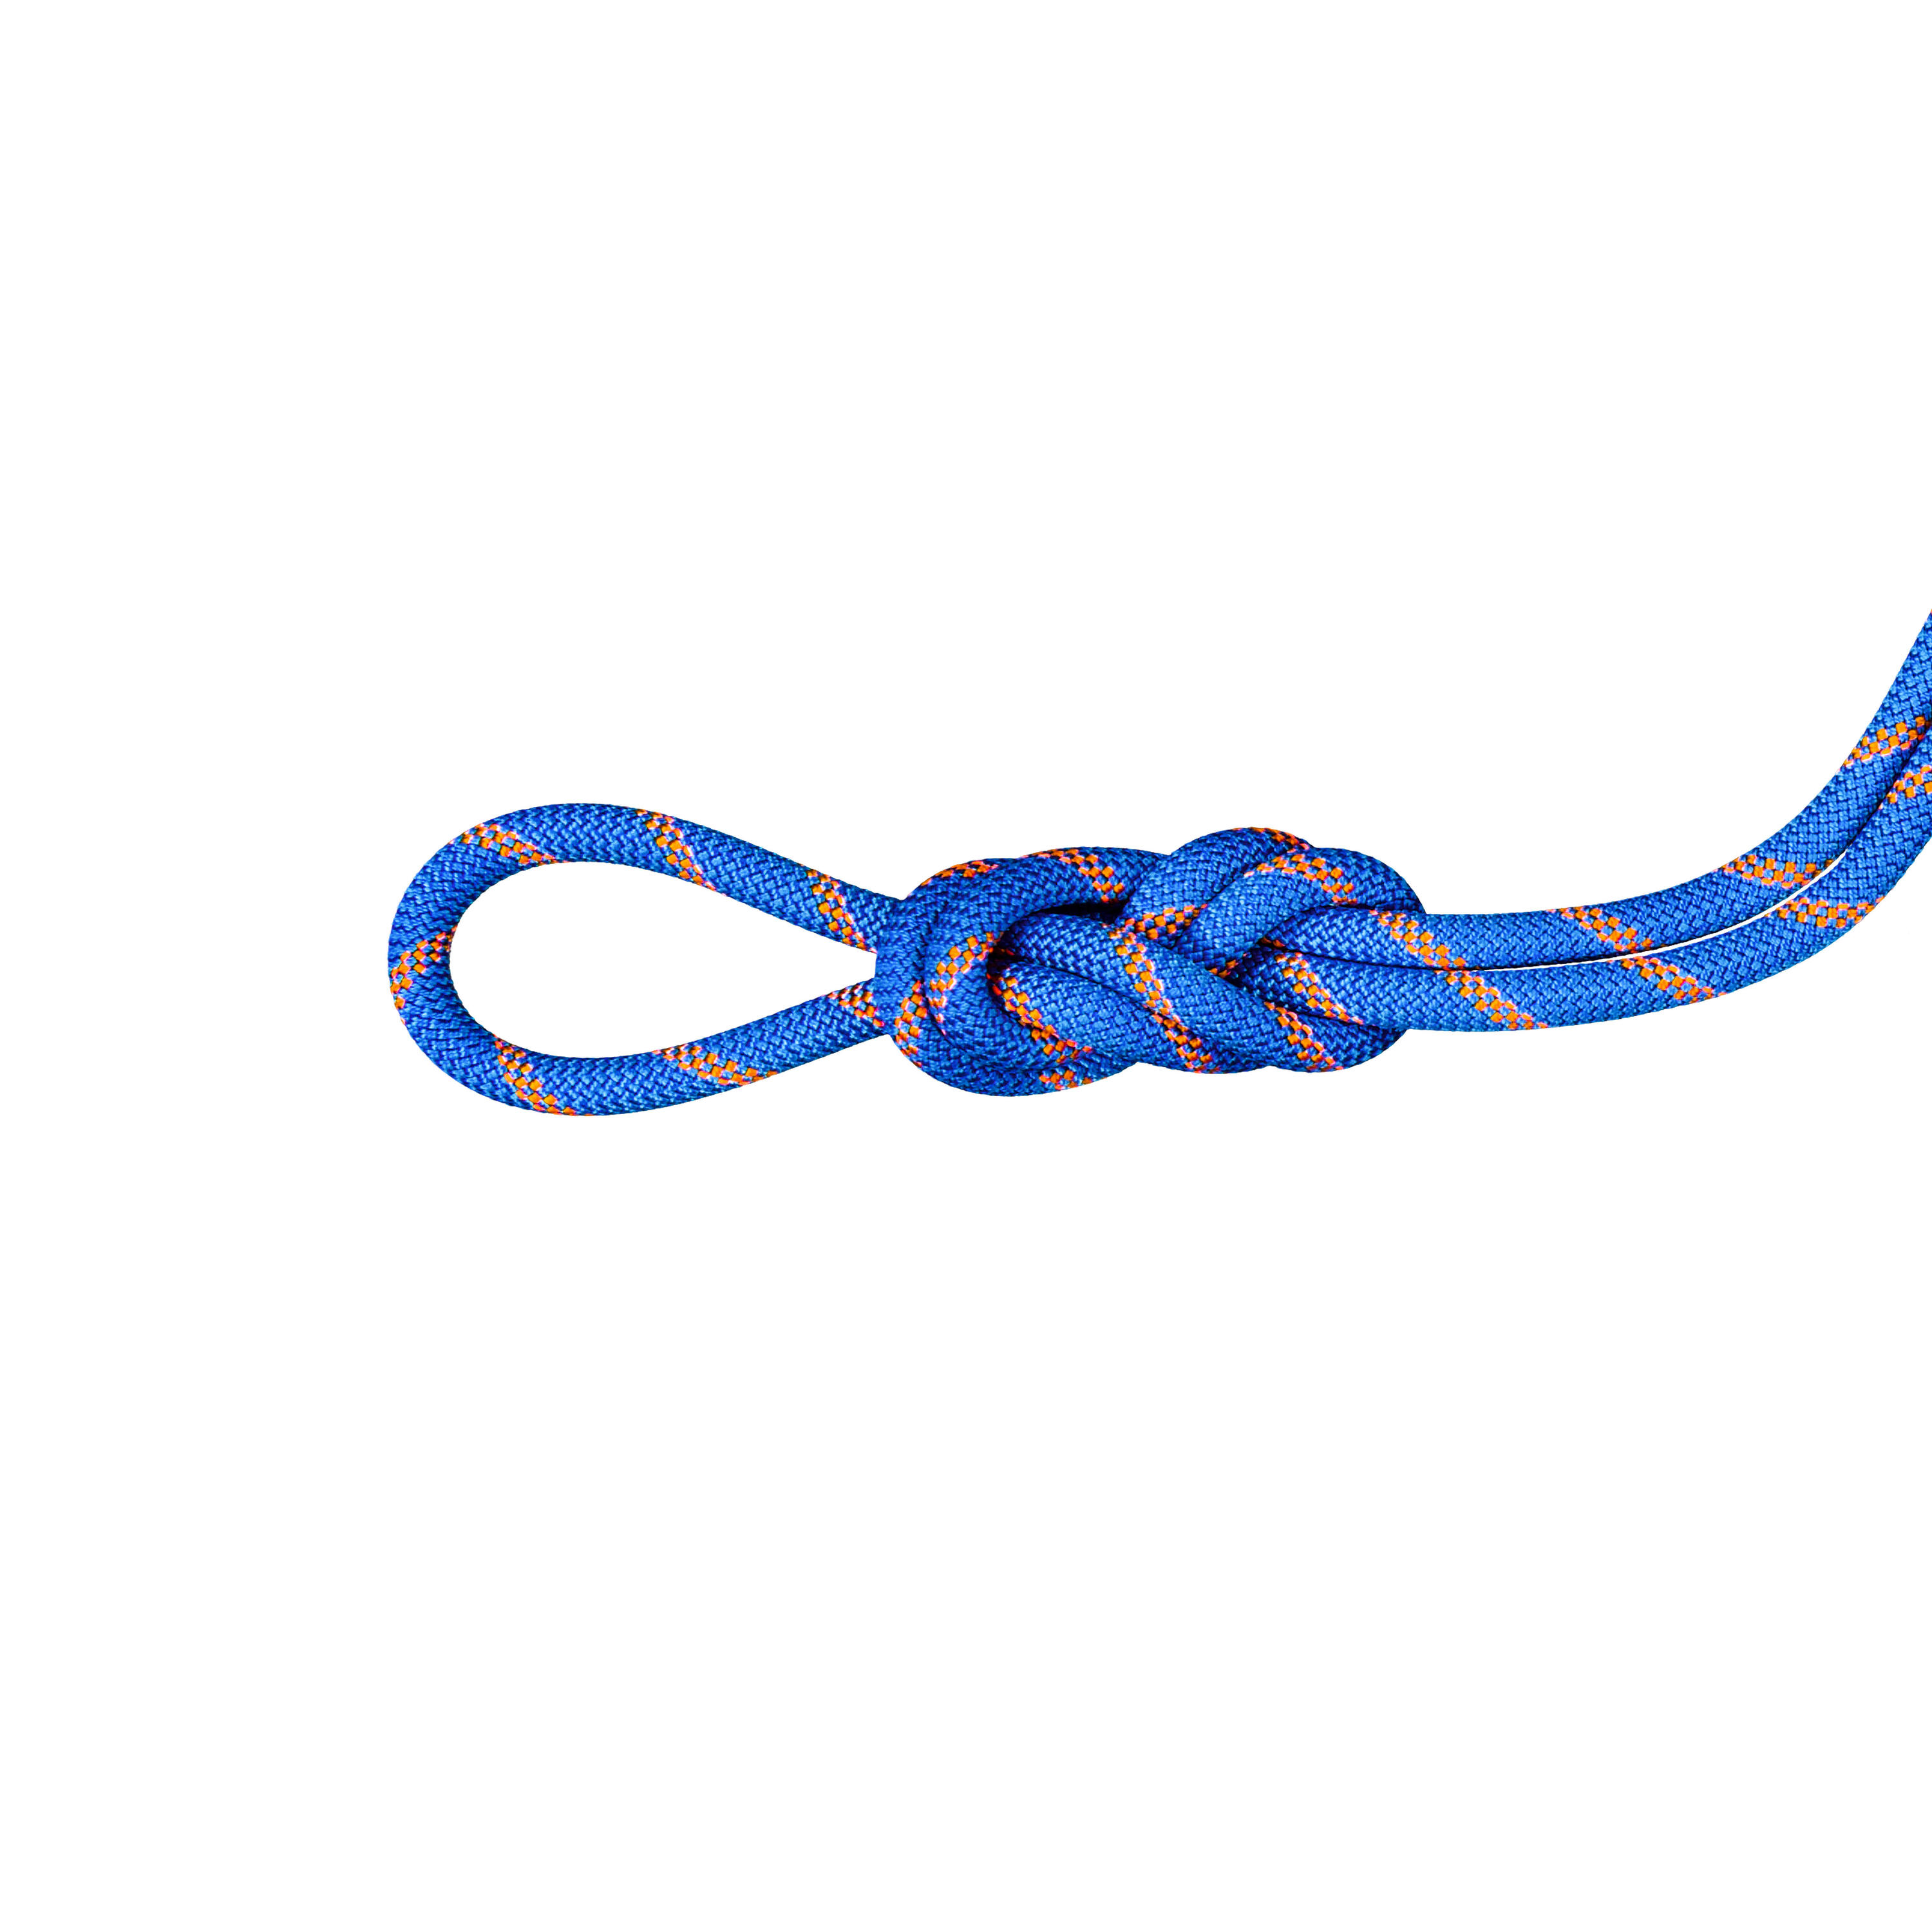 Alpine Sender Dry Triple-Rated Rope 9.0 mm x 50m - Blue 1/4